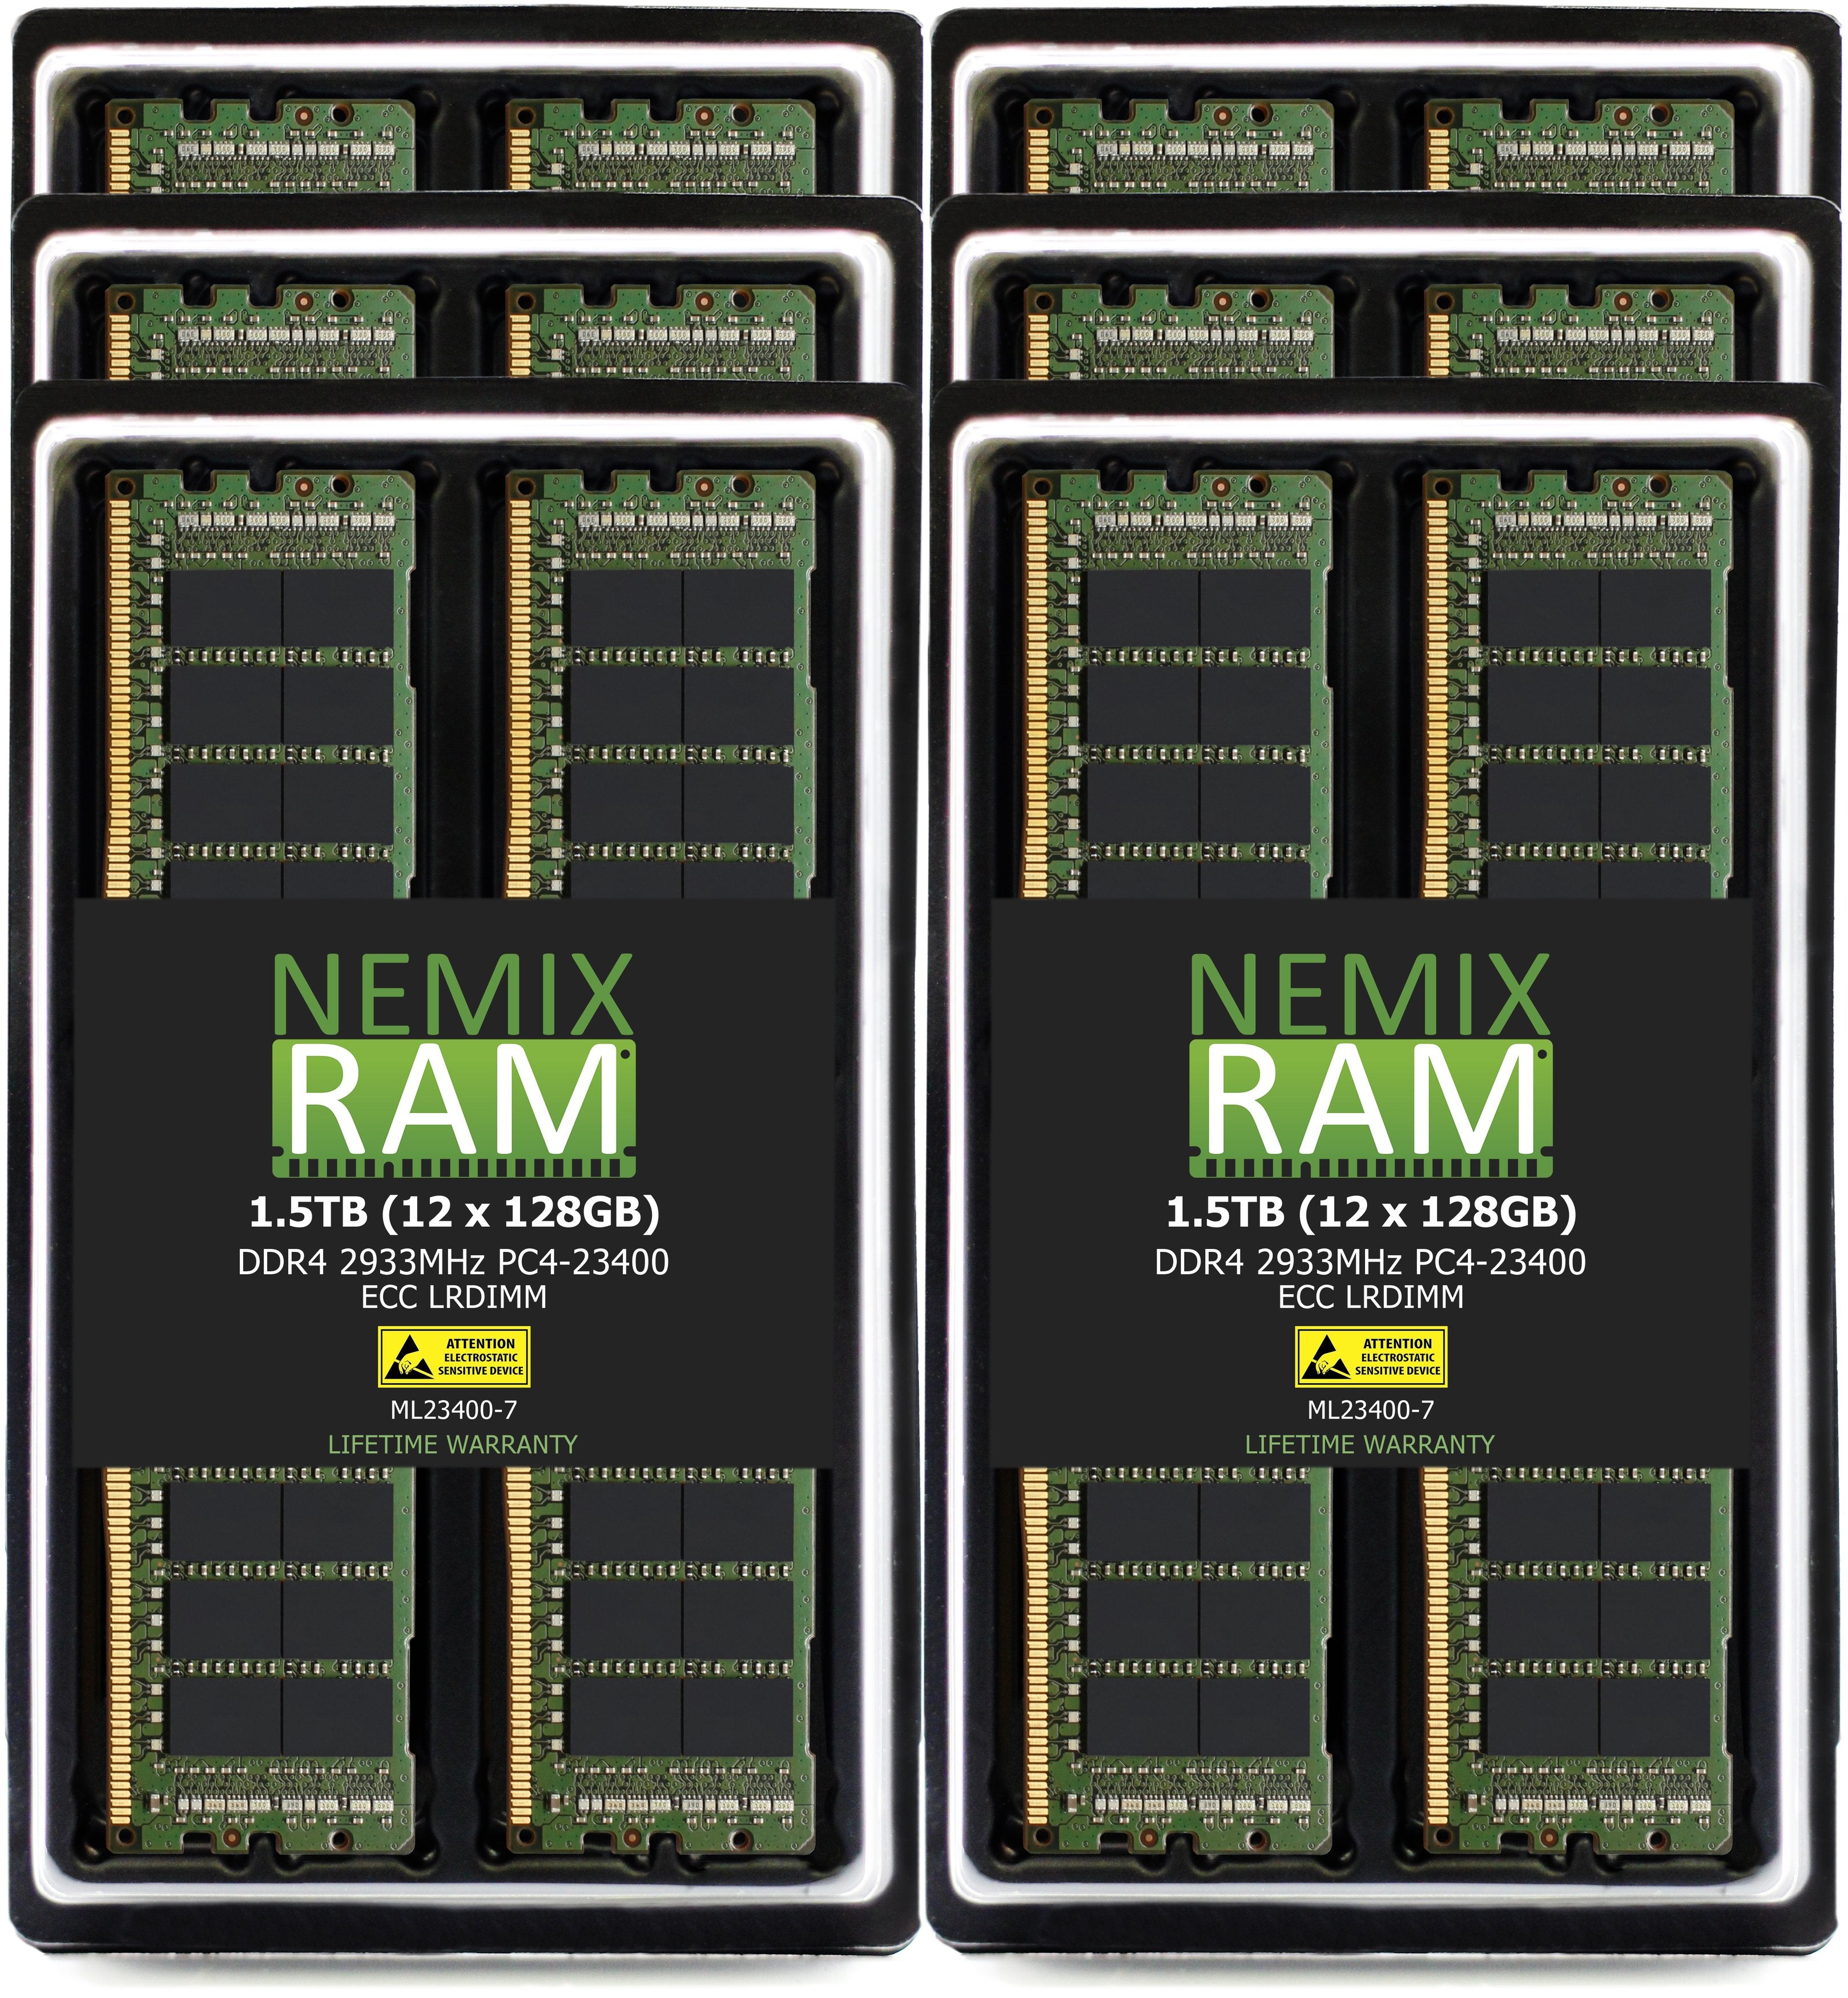 DDR4 2933MHZ PC4-23400 LRDIMM 8RX4